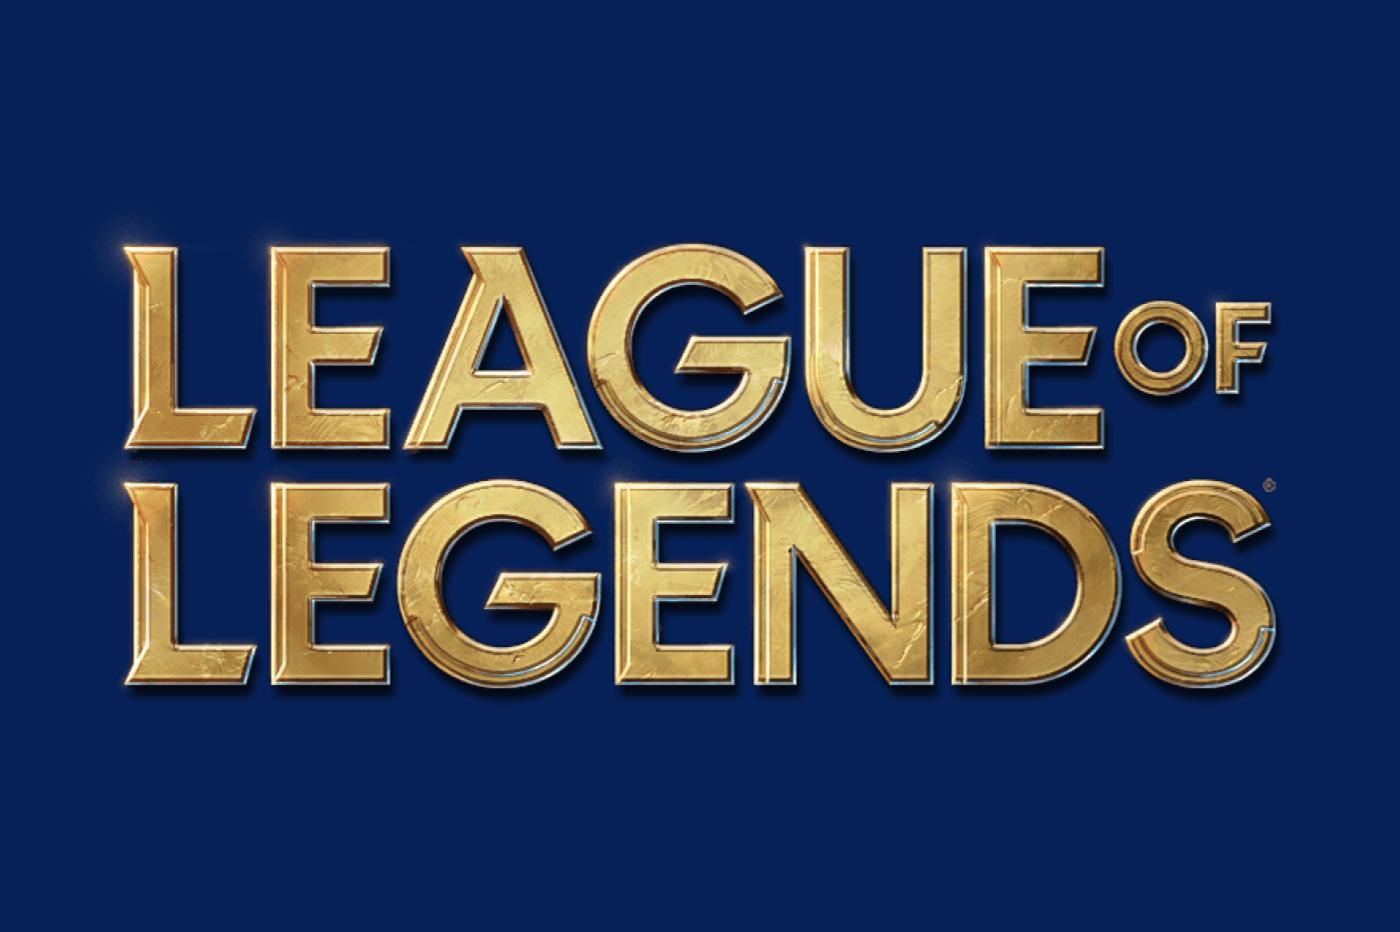 personnage league of legends jinx fortnite